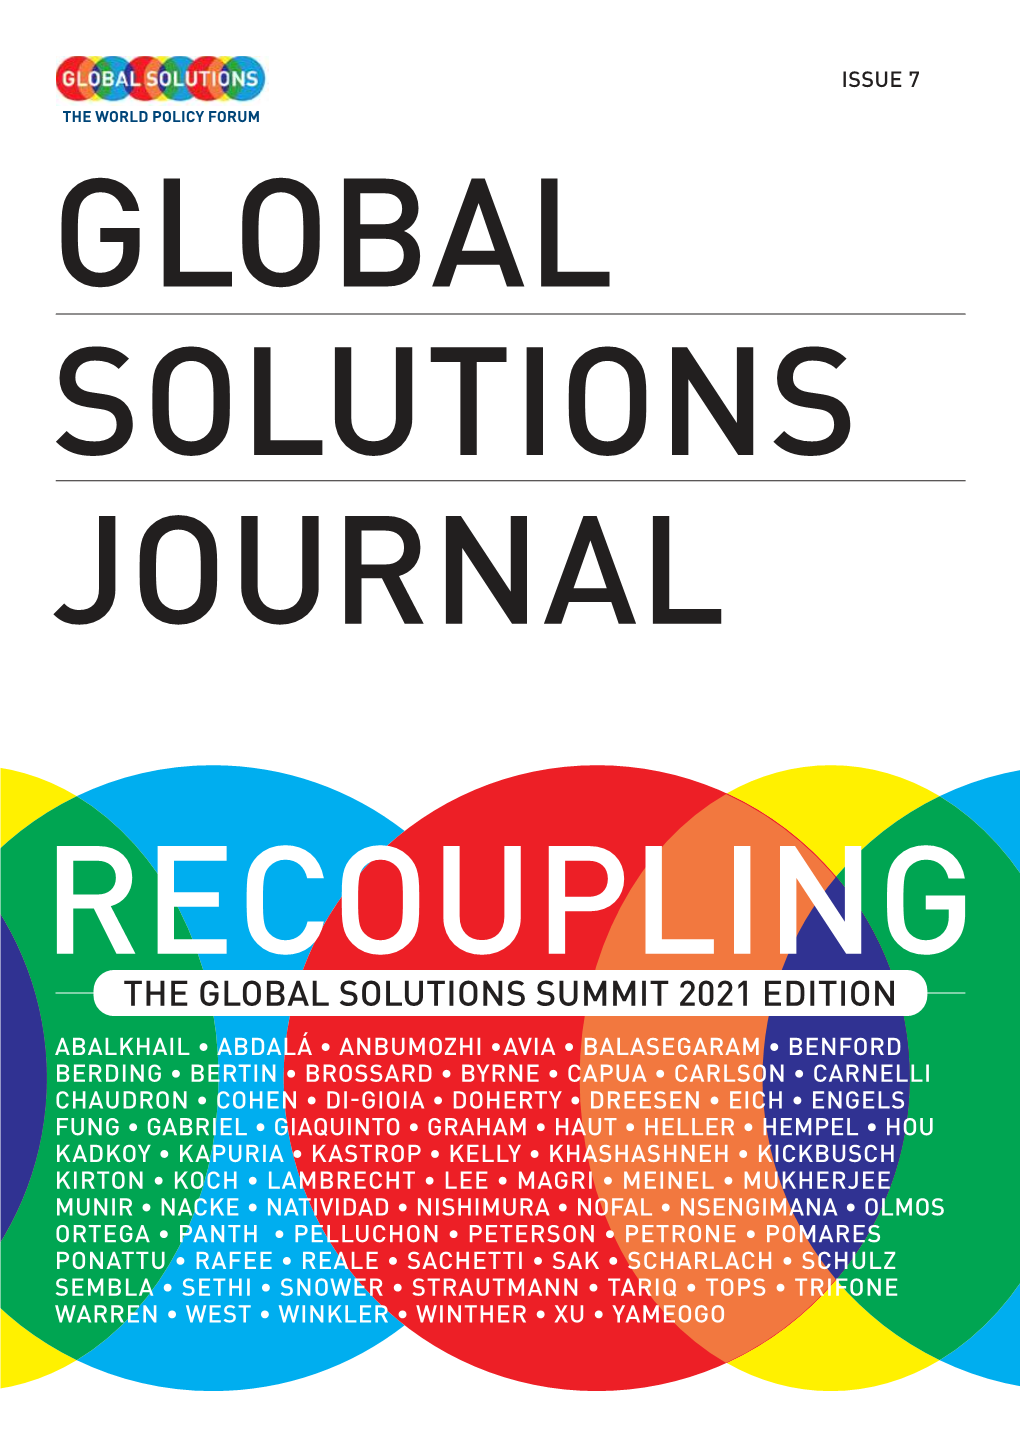 Global Solutions Journal Recoupling